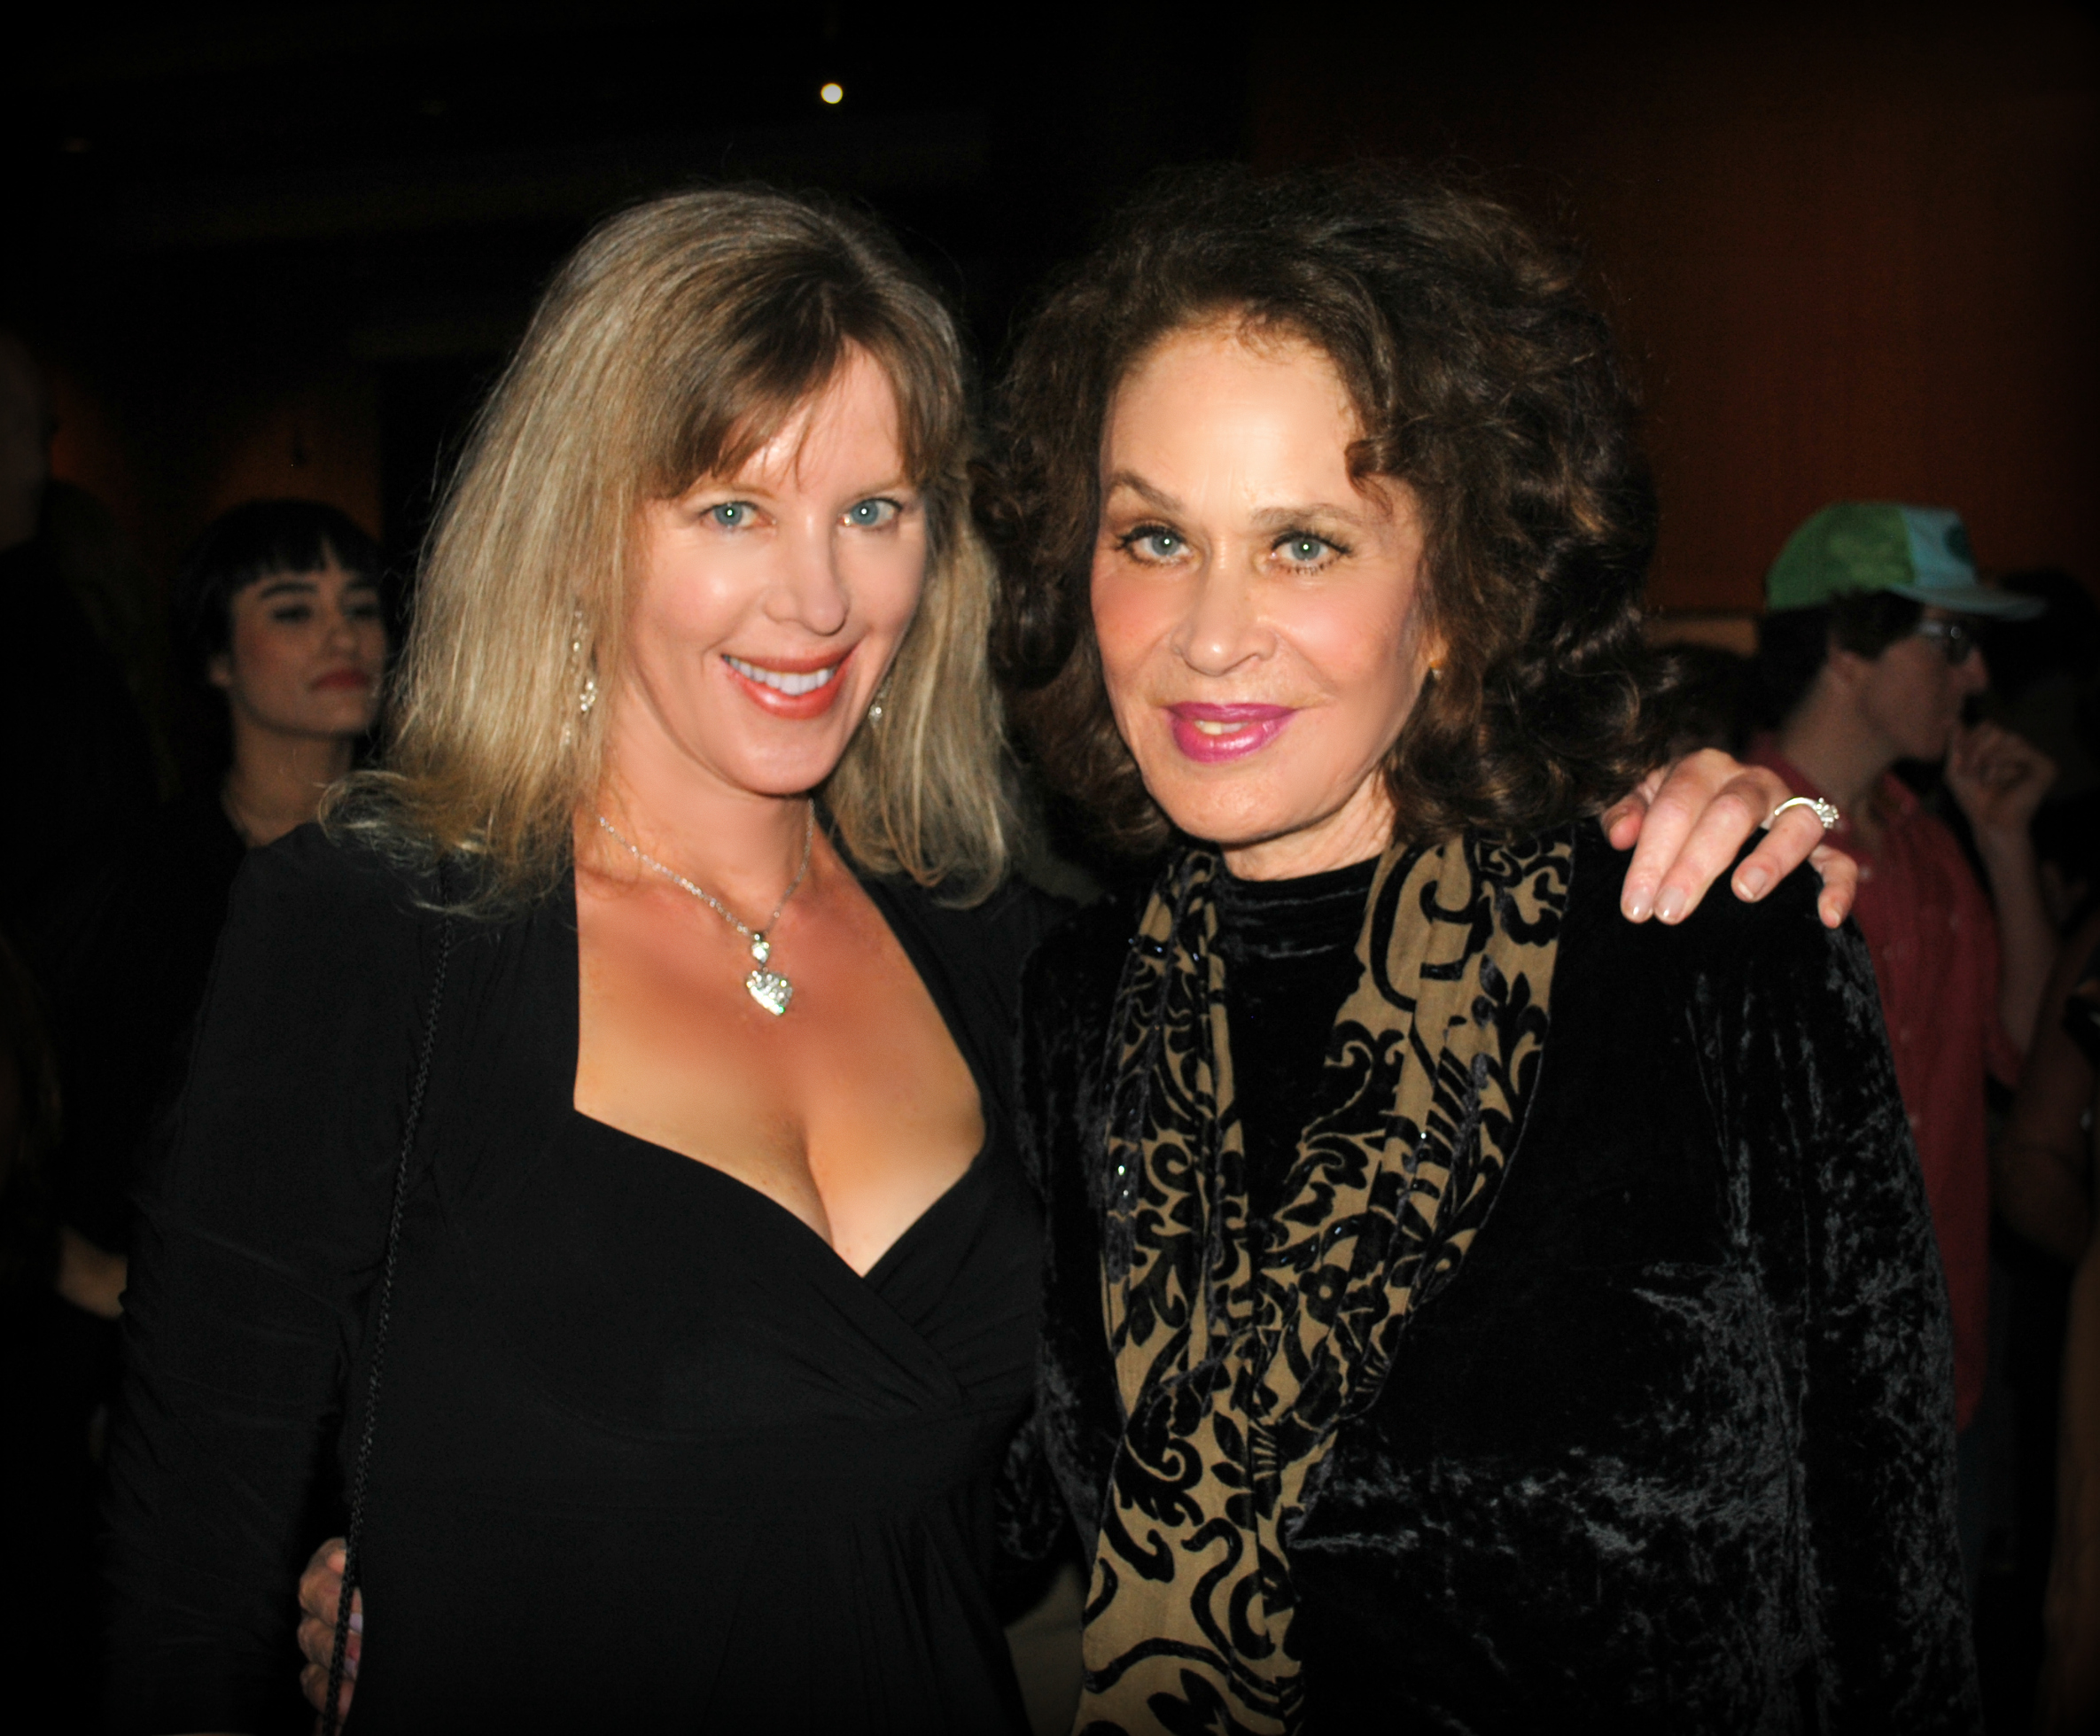 Karen Black and I at the premiere.